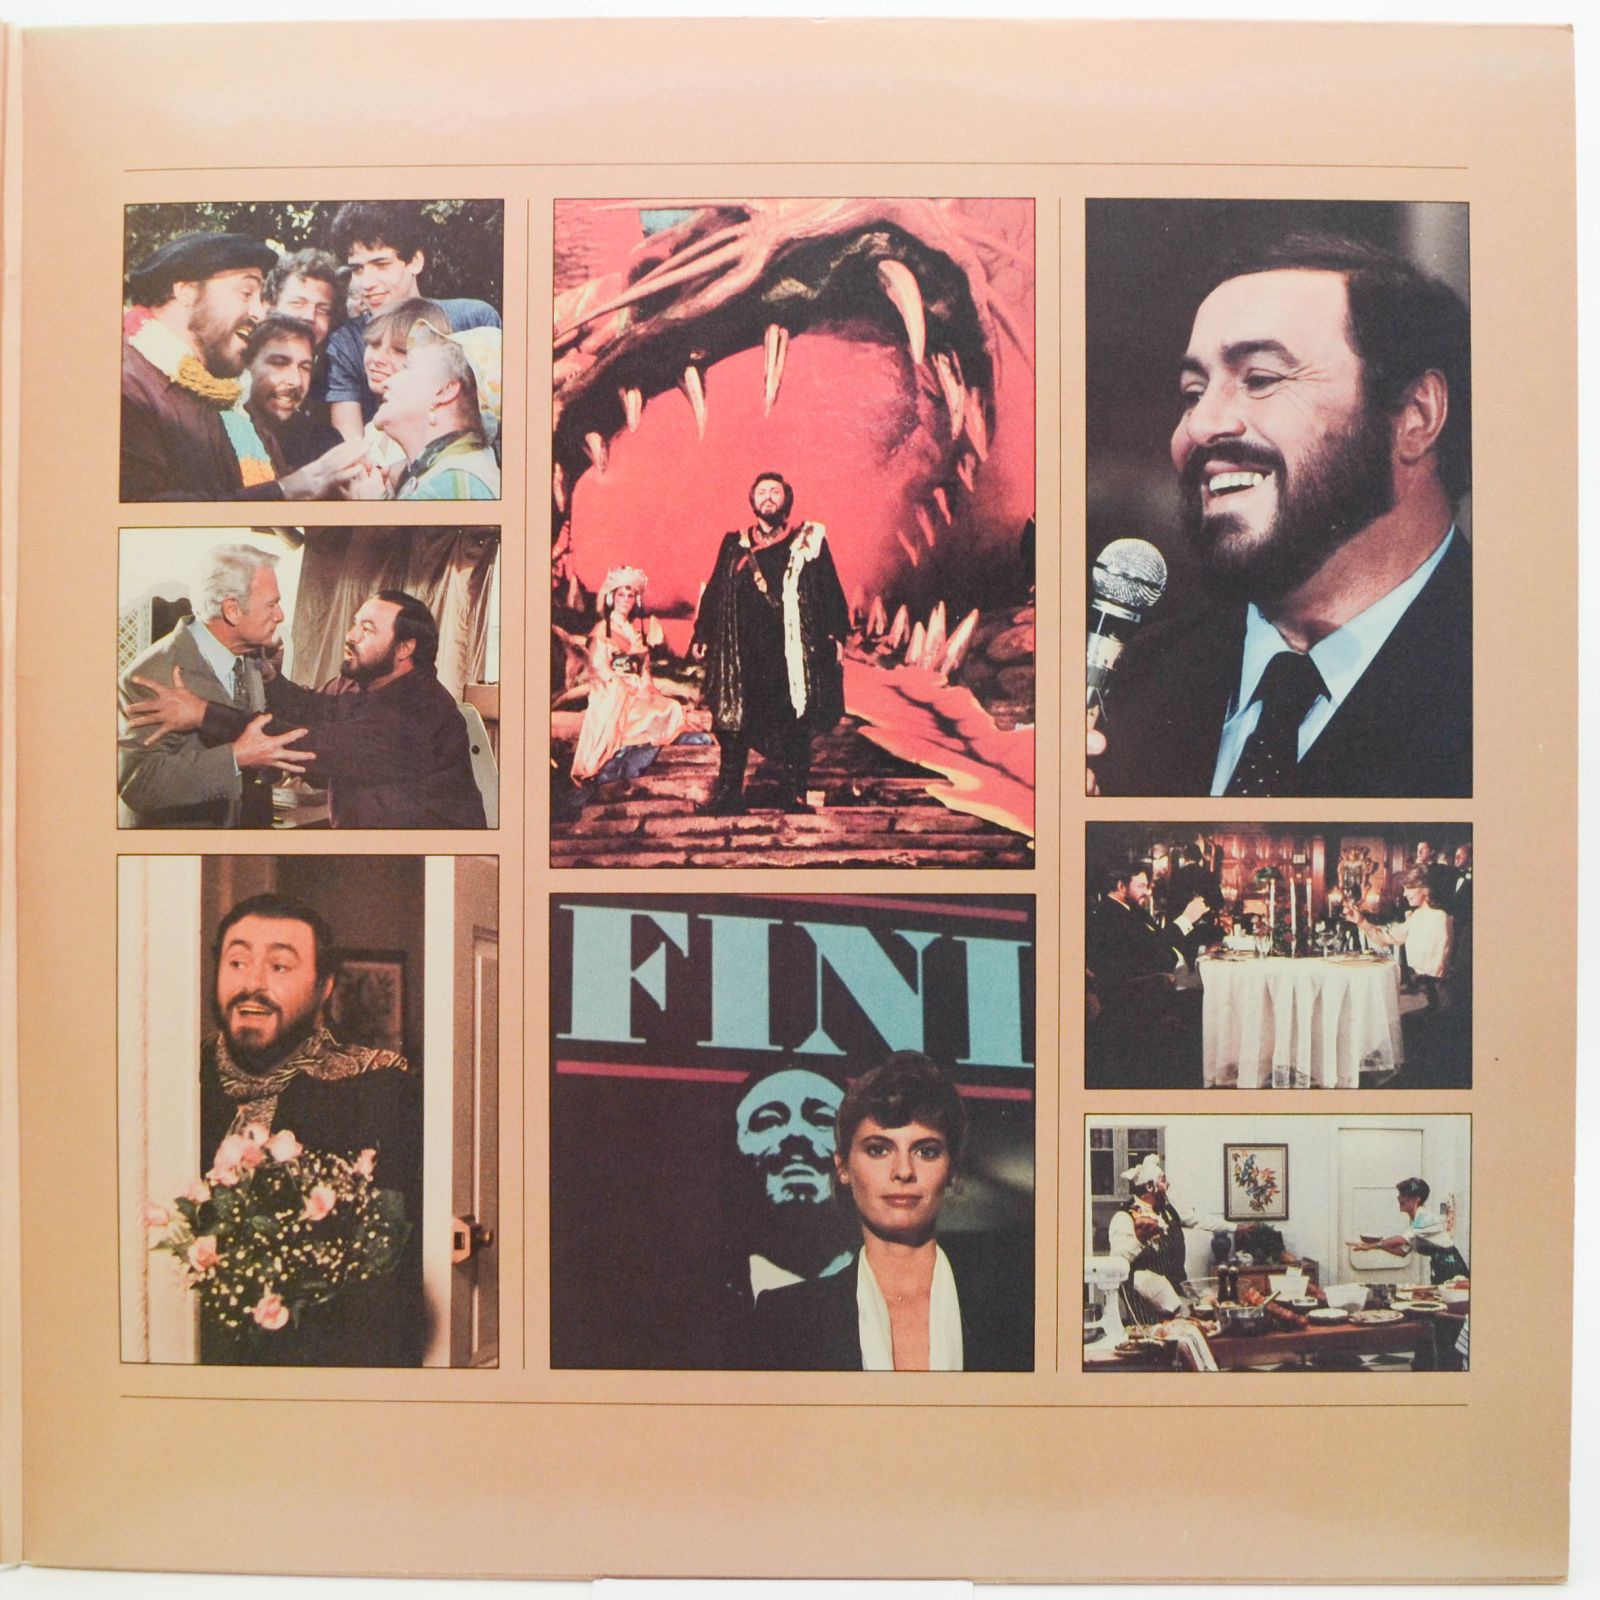 Luciano Pavarotti — Yes, Giorgio, 1982